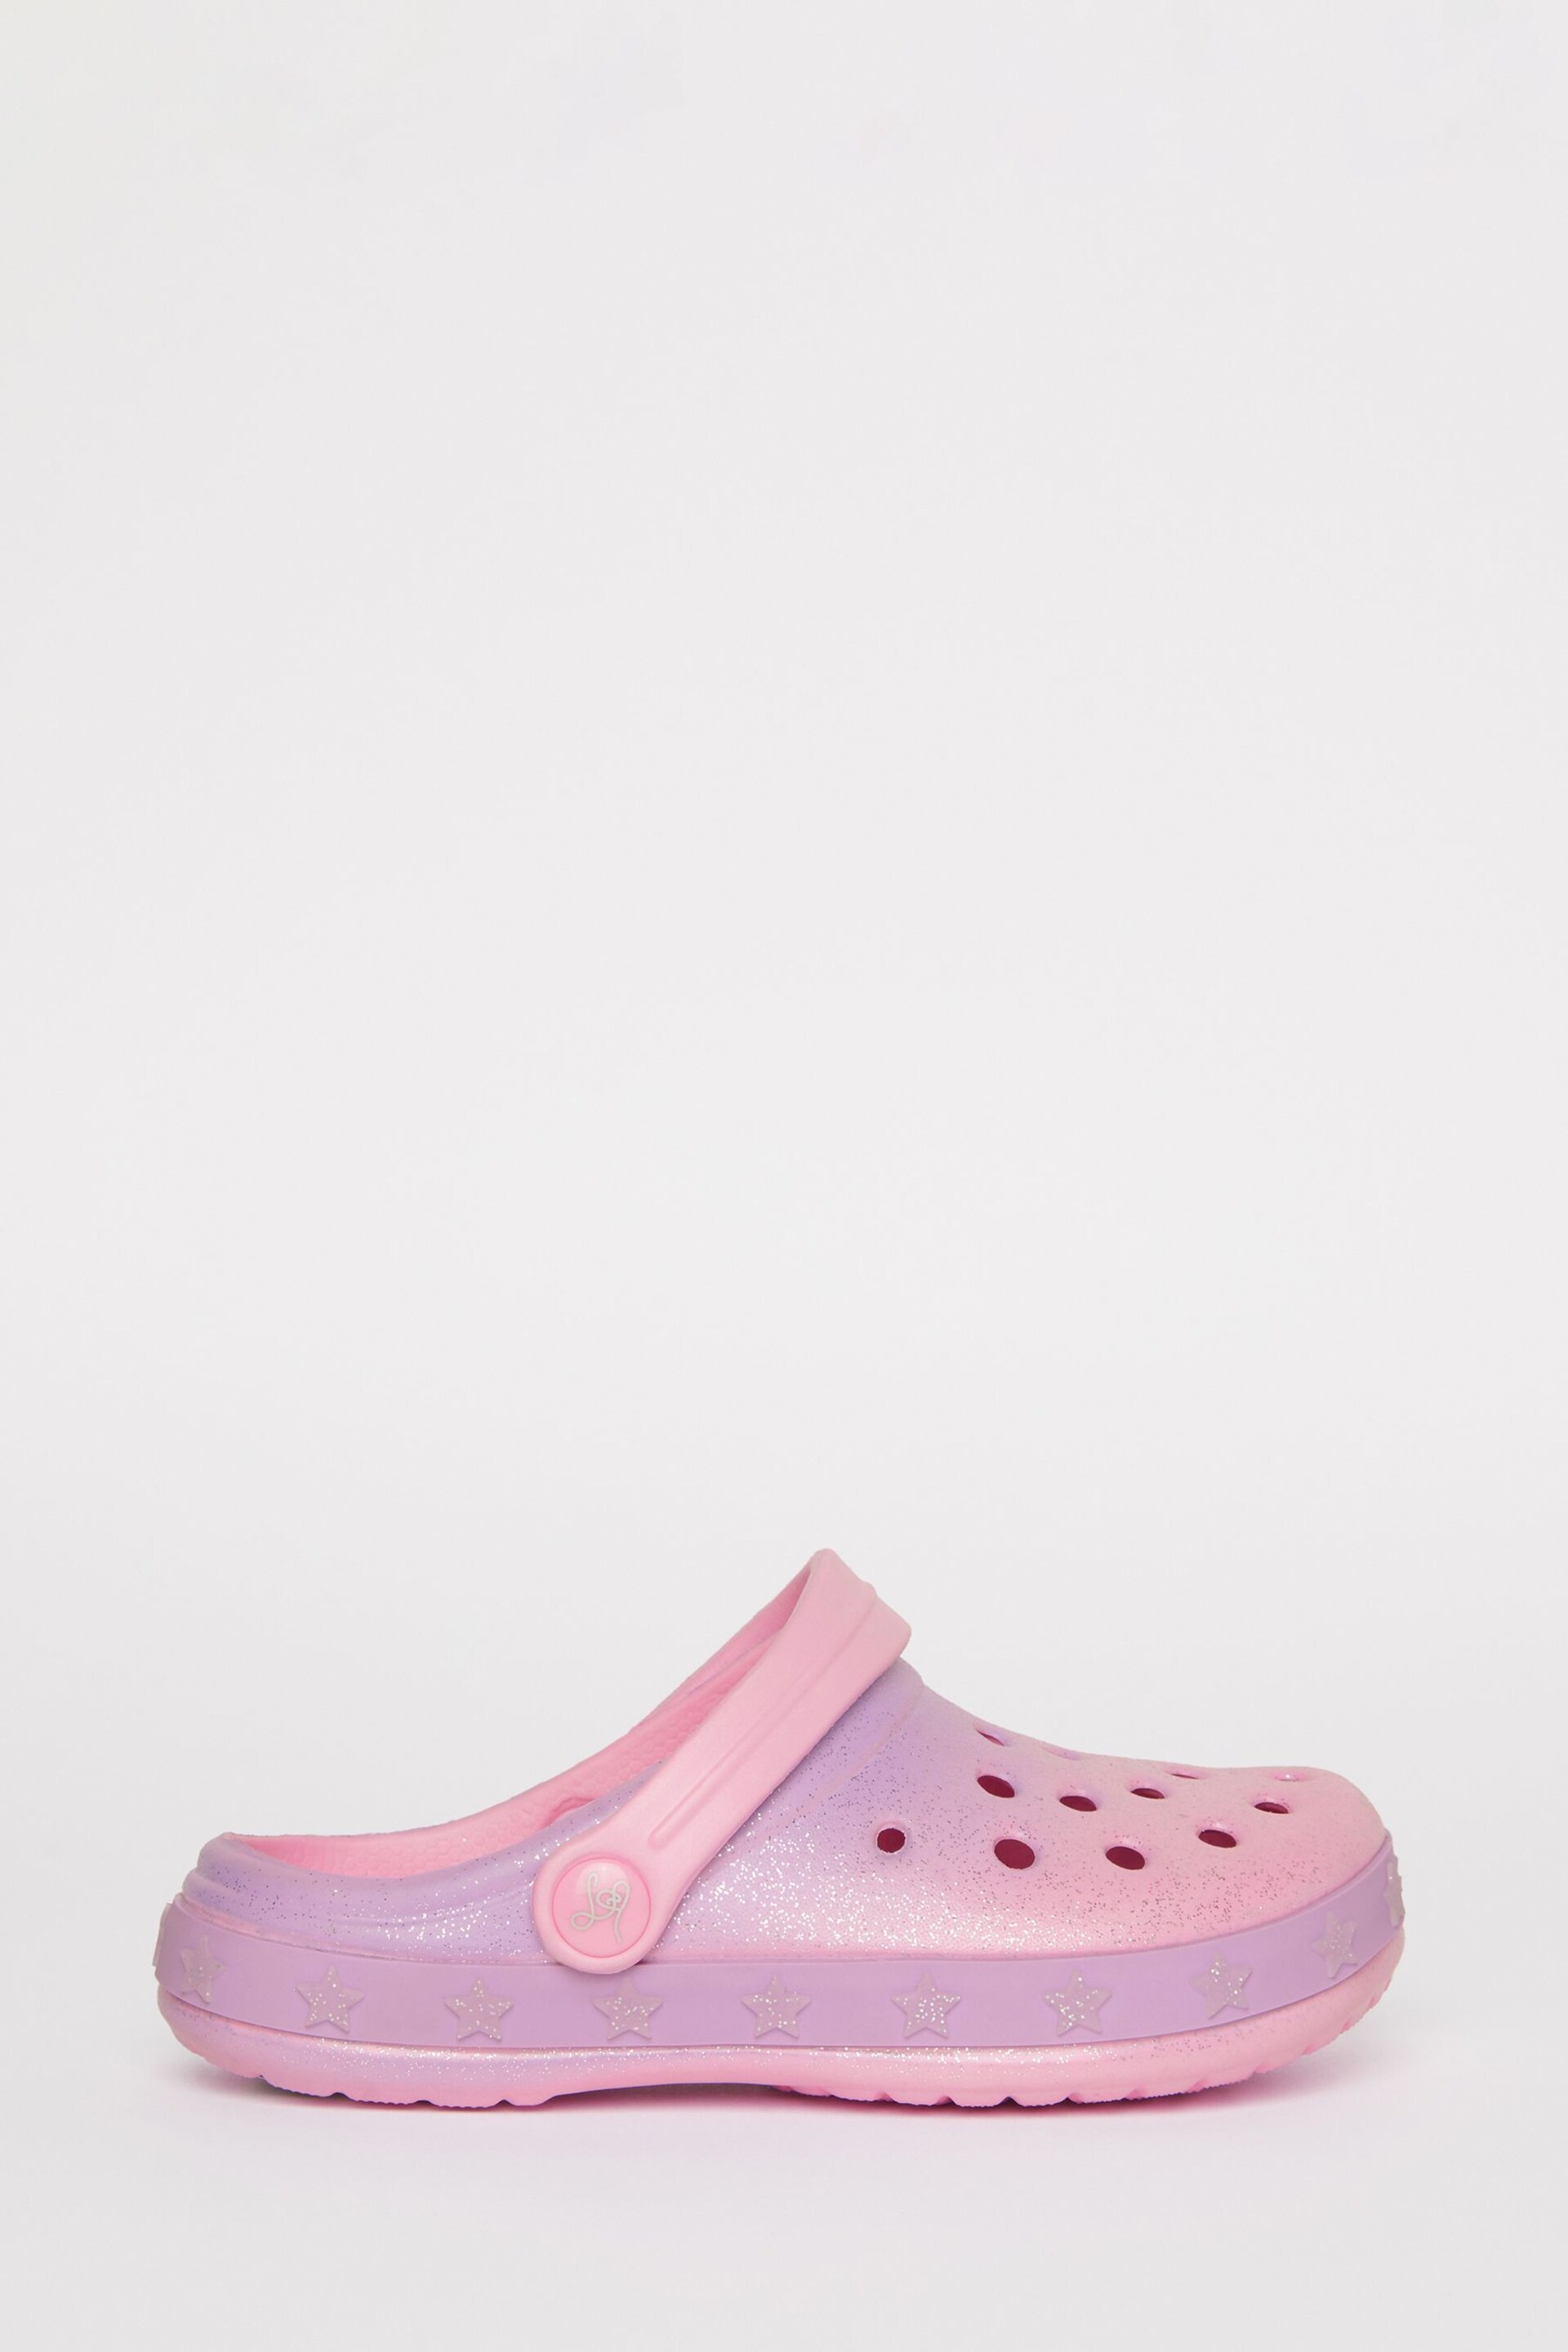 Lipsy Pink Slip On Glitter Clog Sandals - Image 2 of 4